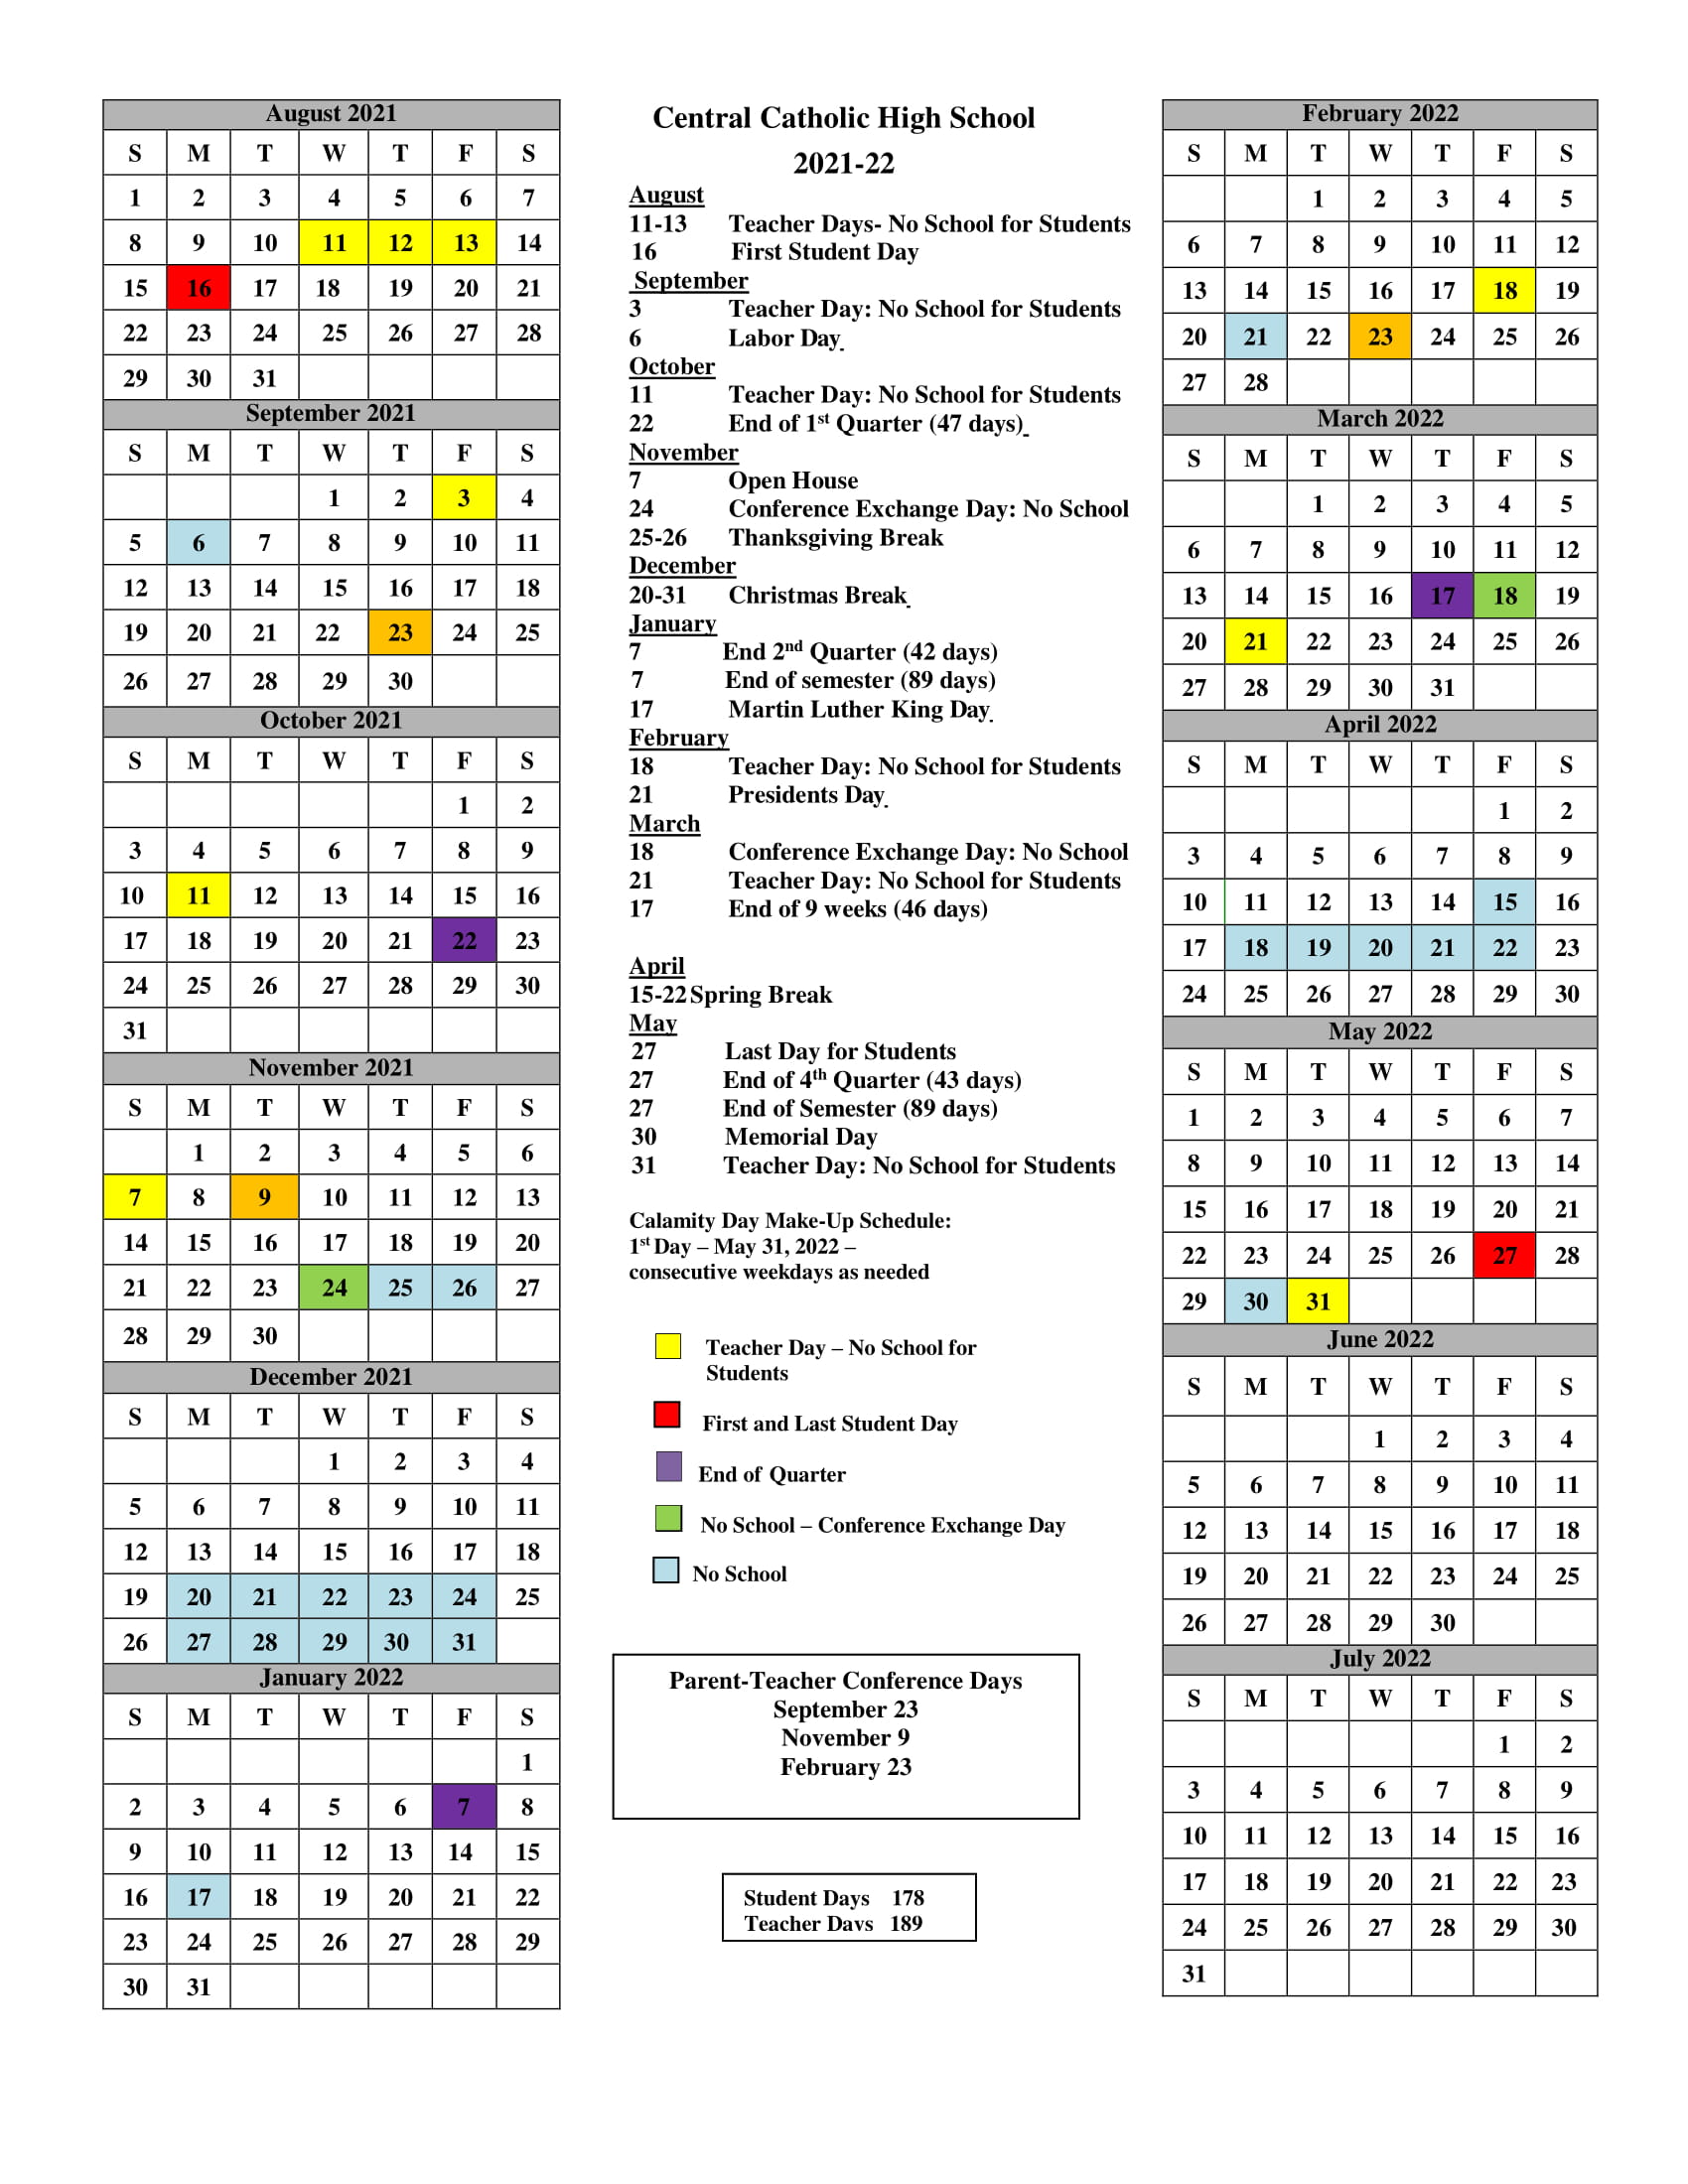 Ohio State Academic Calendar 2022 2023 Academic Calendar 2021-2022